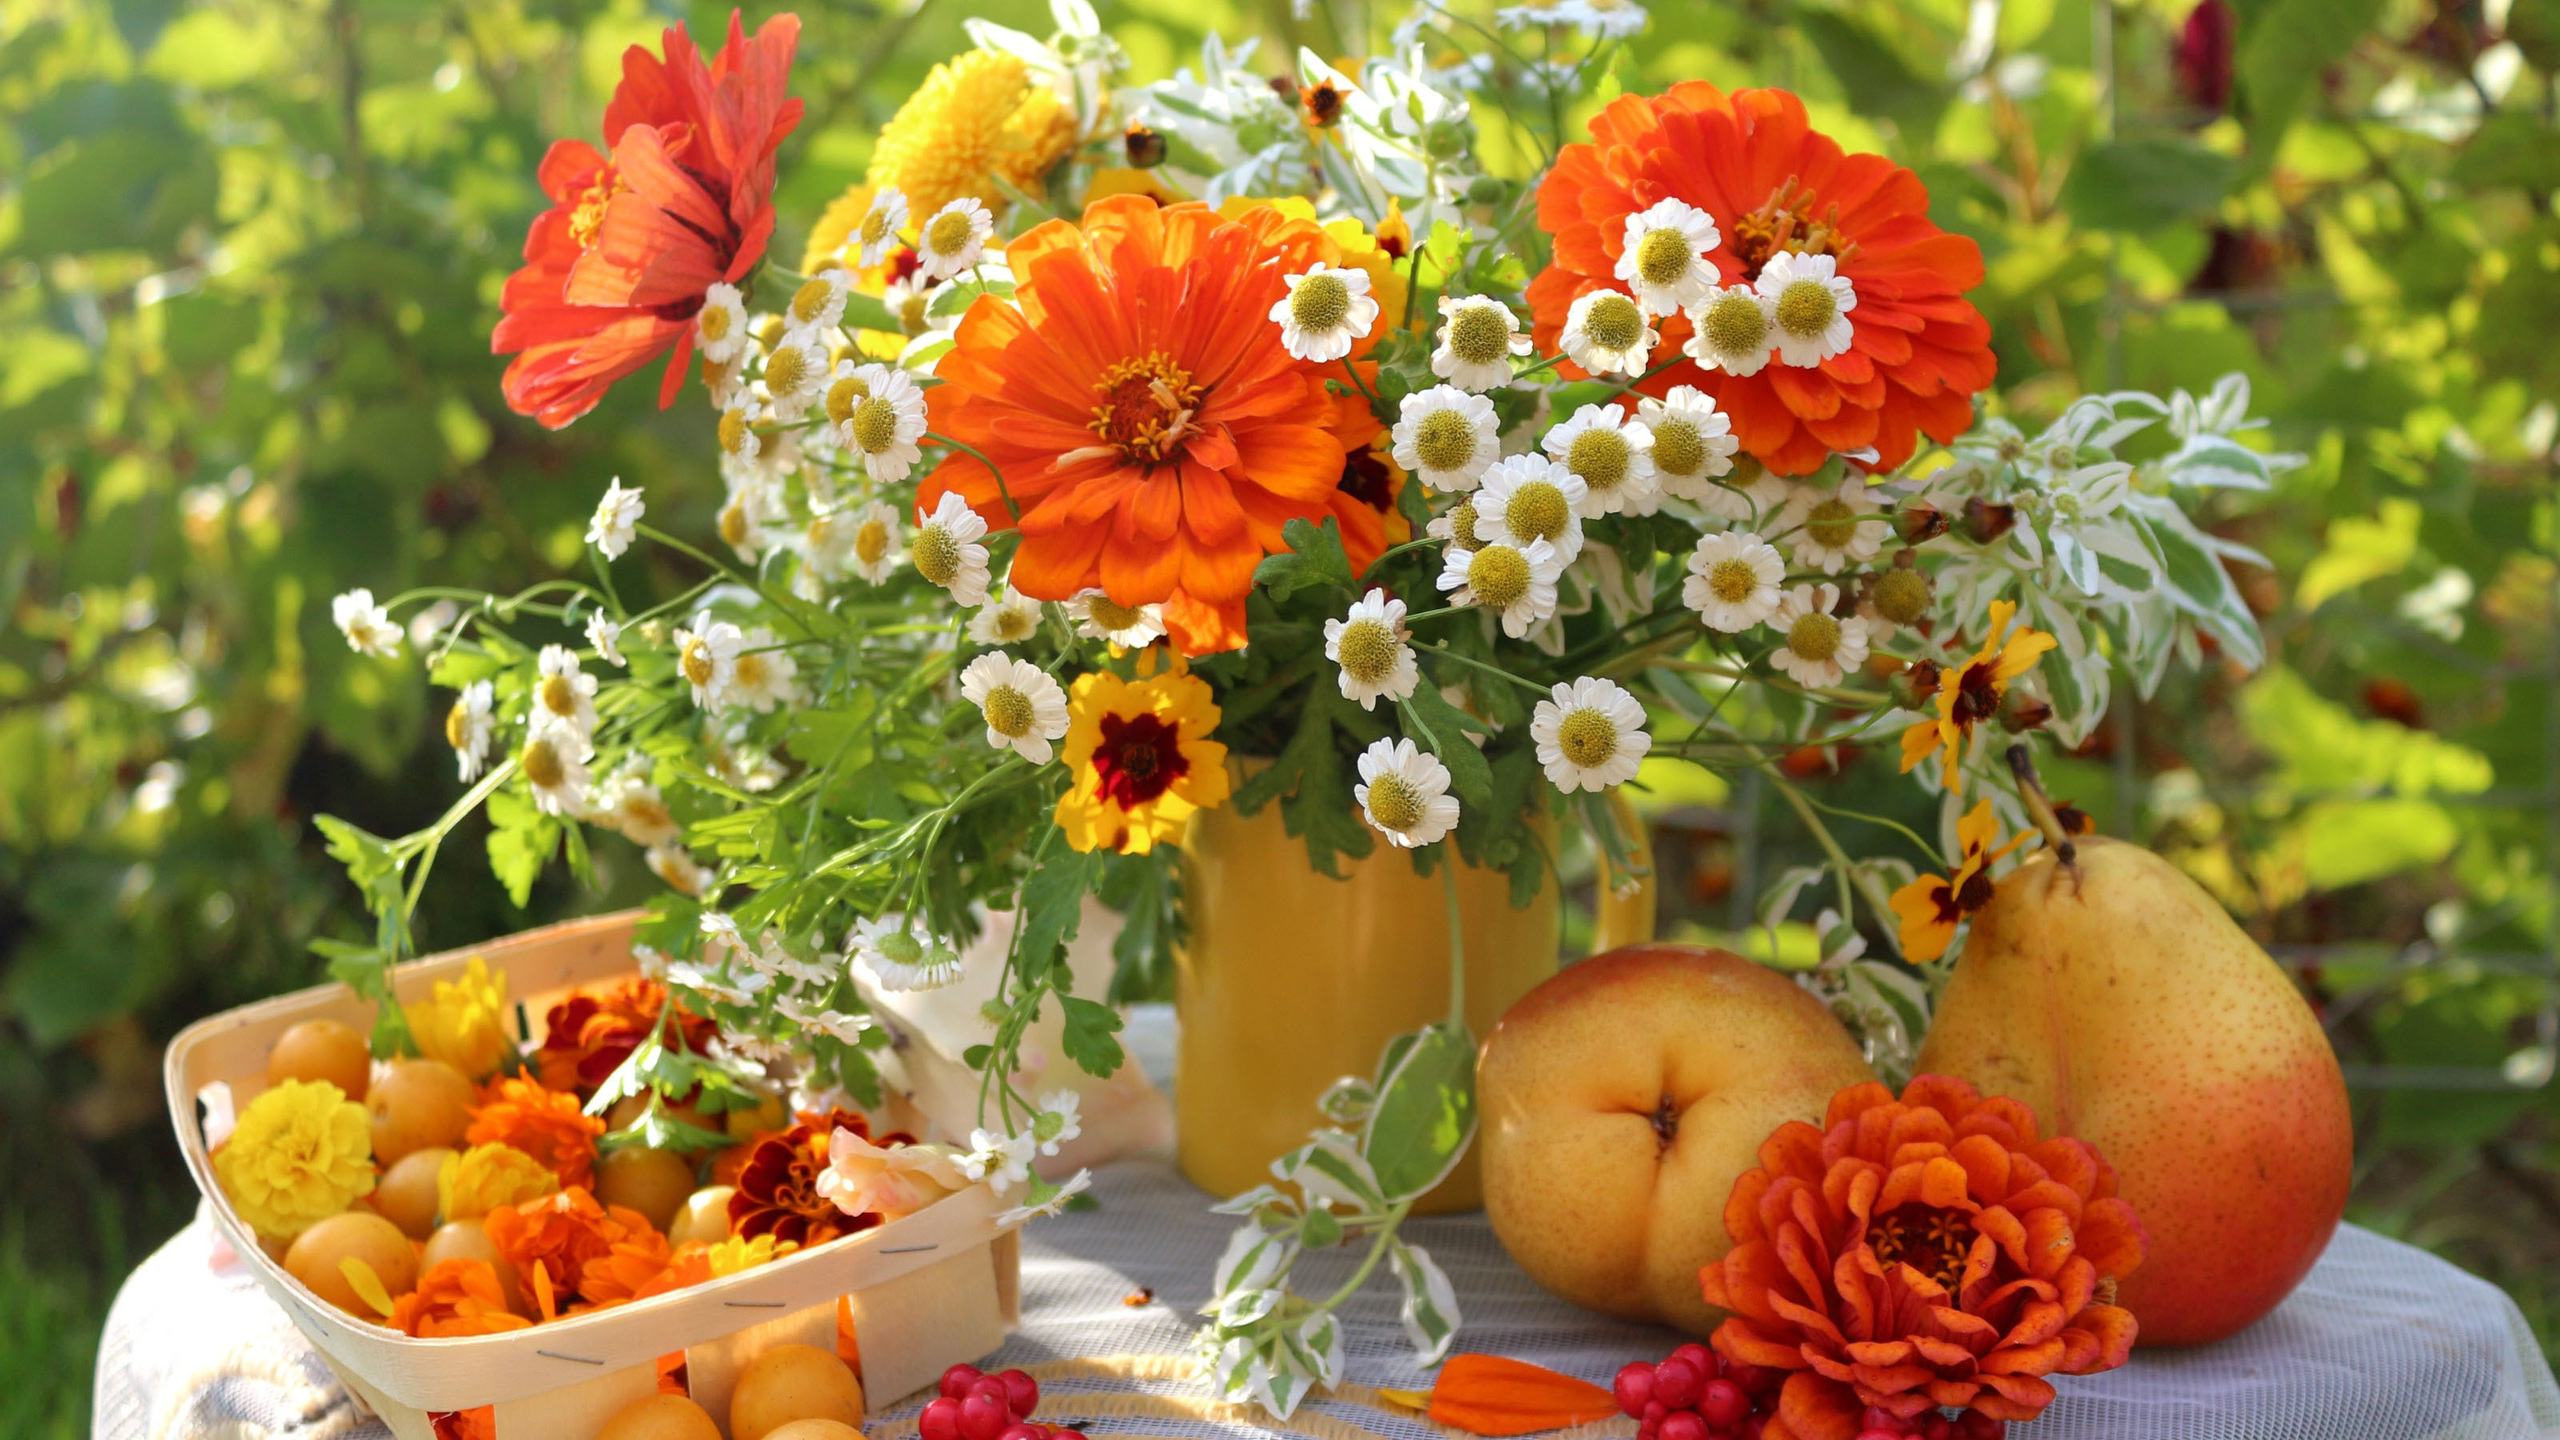 bouquet, table, on, fruit, summer garden, colors, still